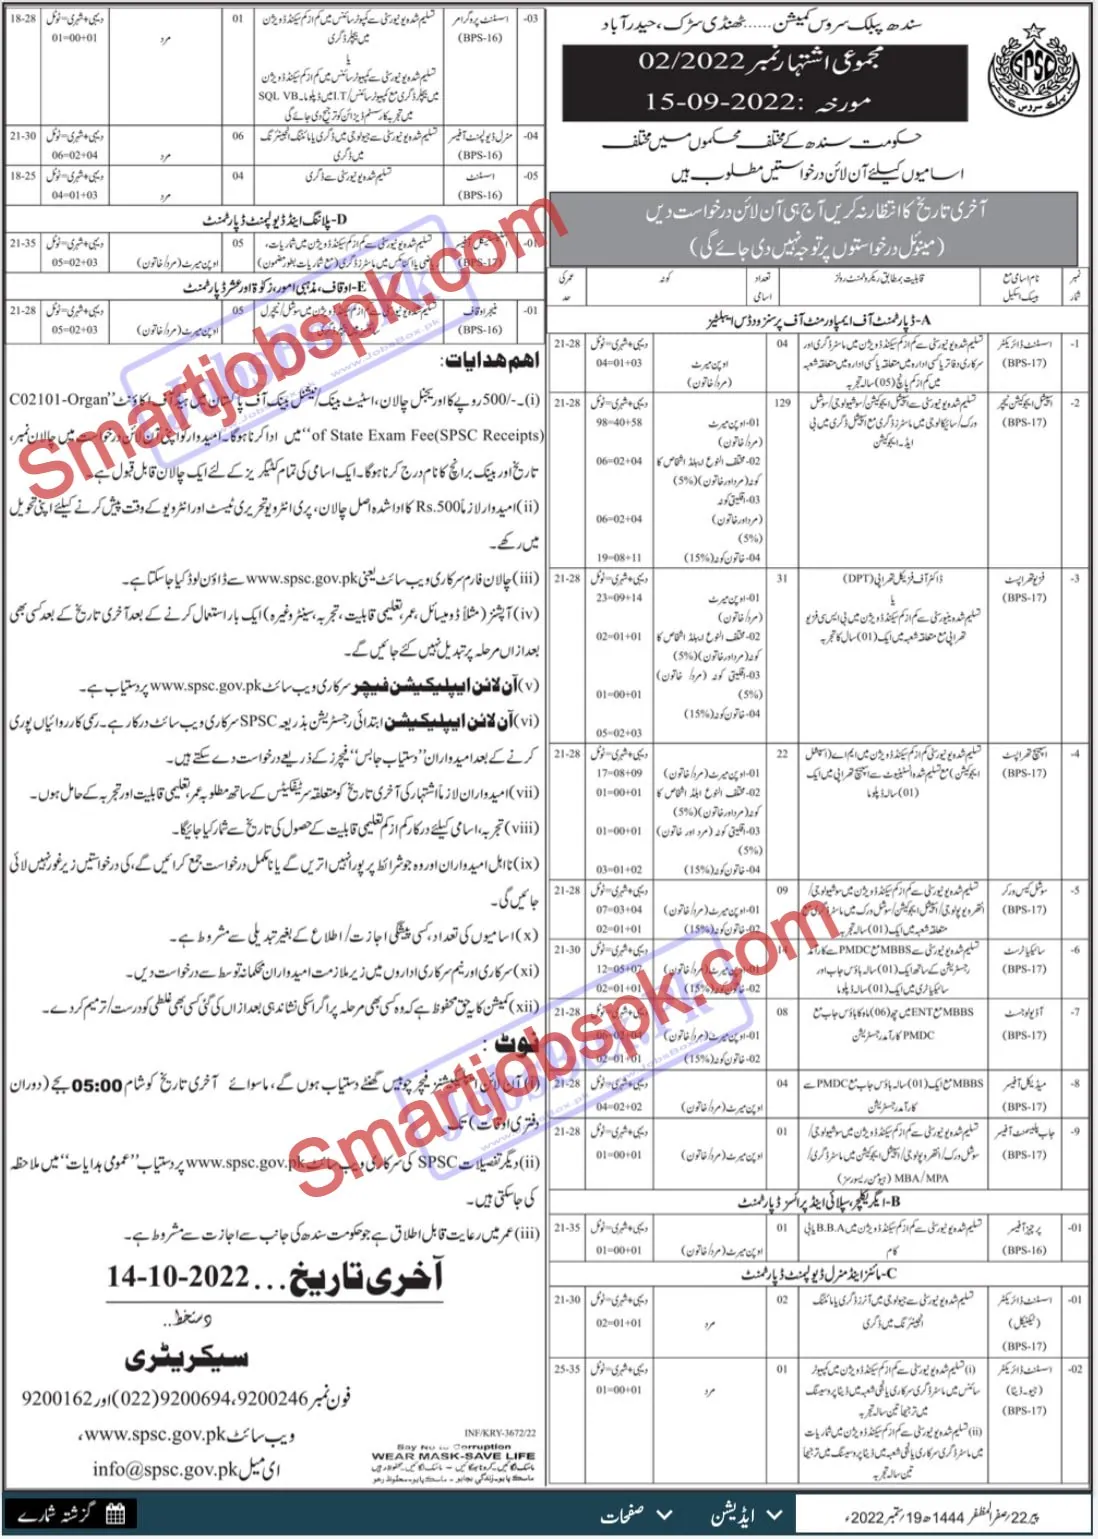 Sindh Public Service Commission SPSC Jobs 2022 Apply Online - www.spsc.gov.pk